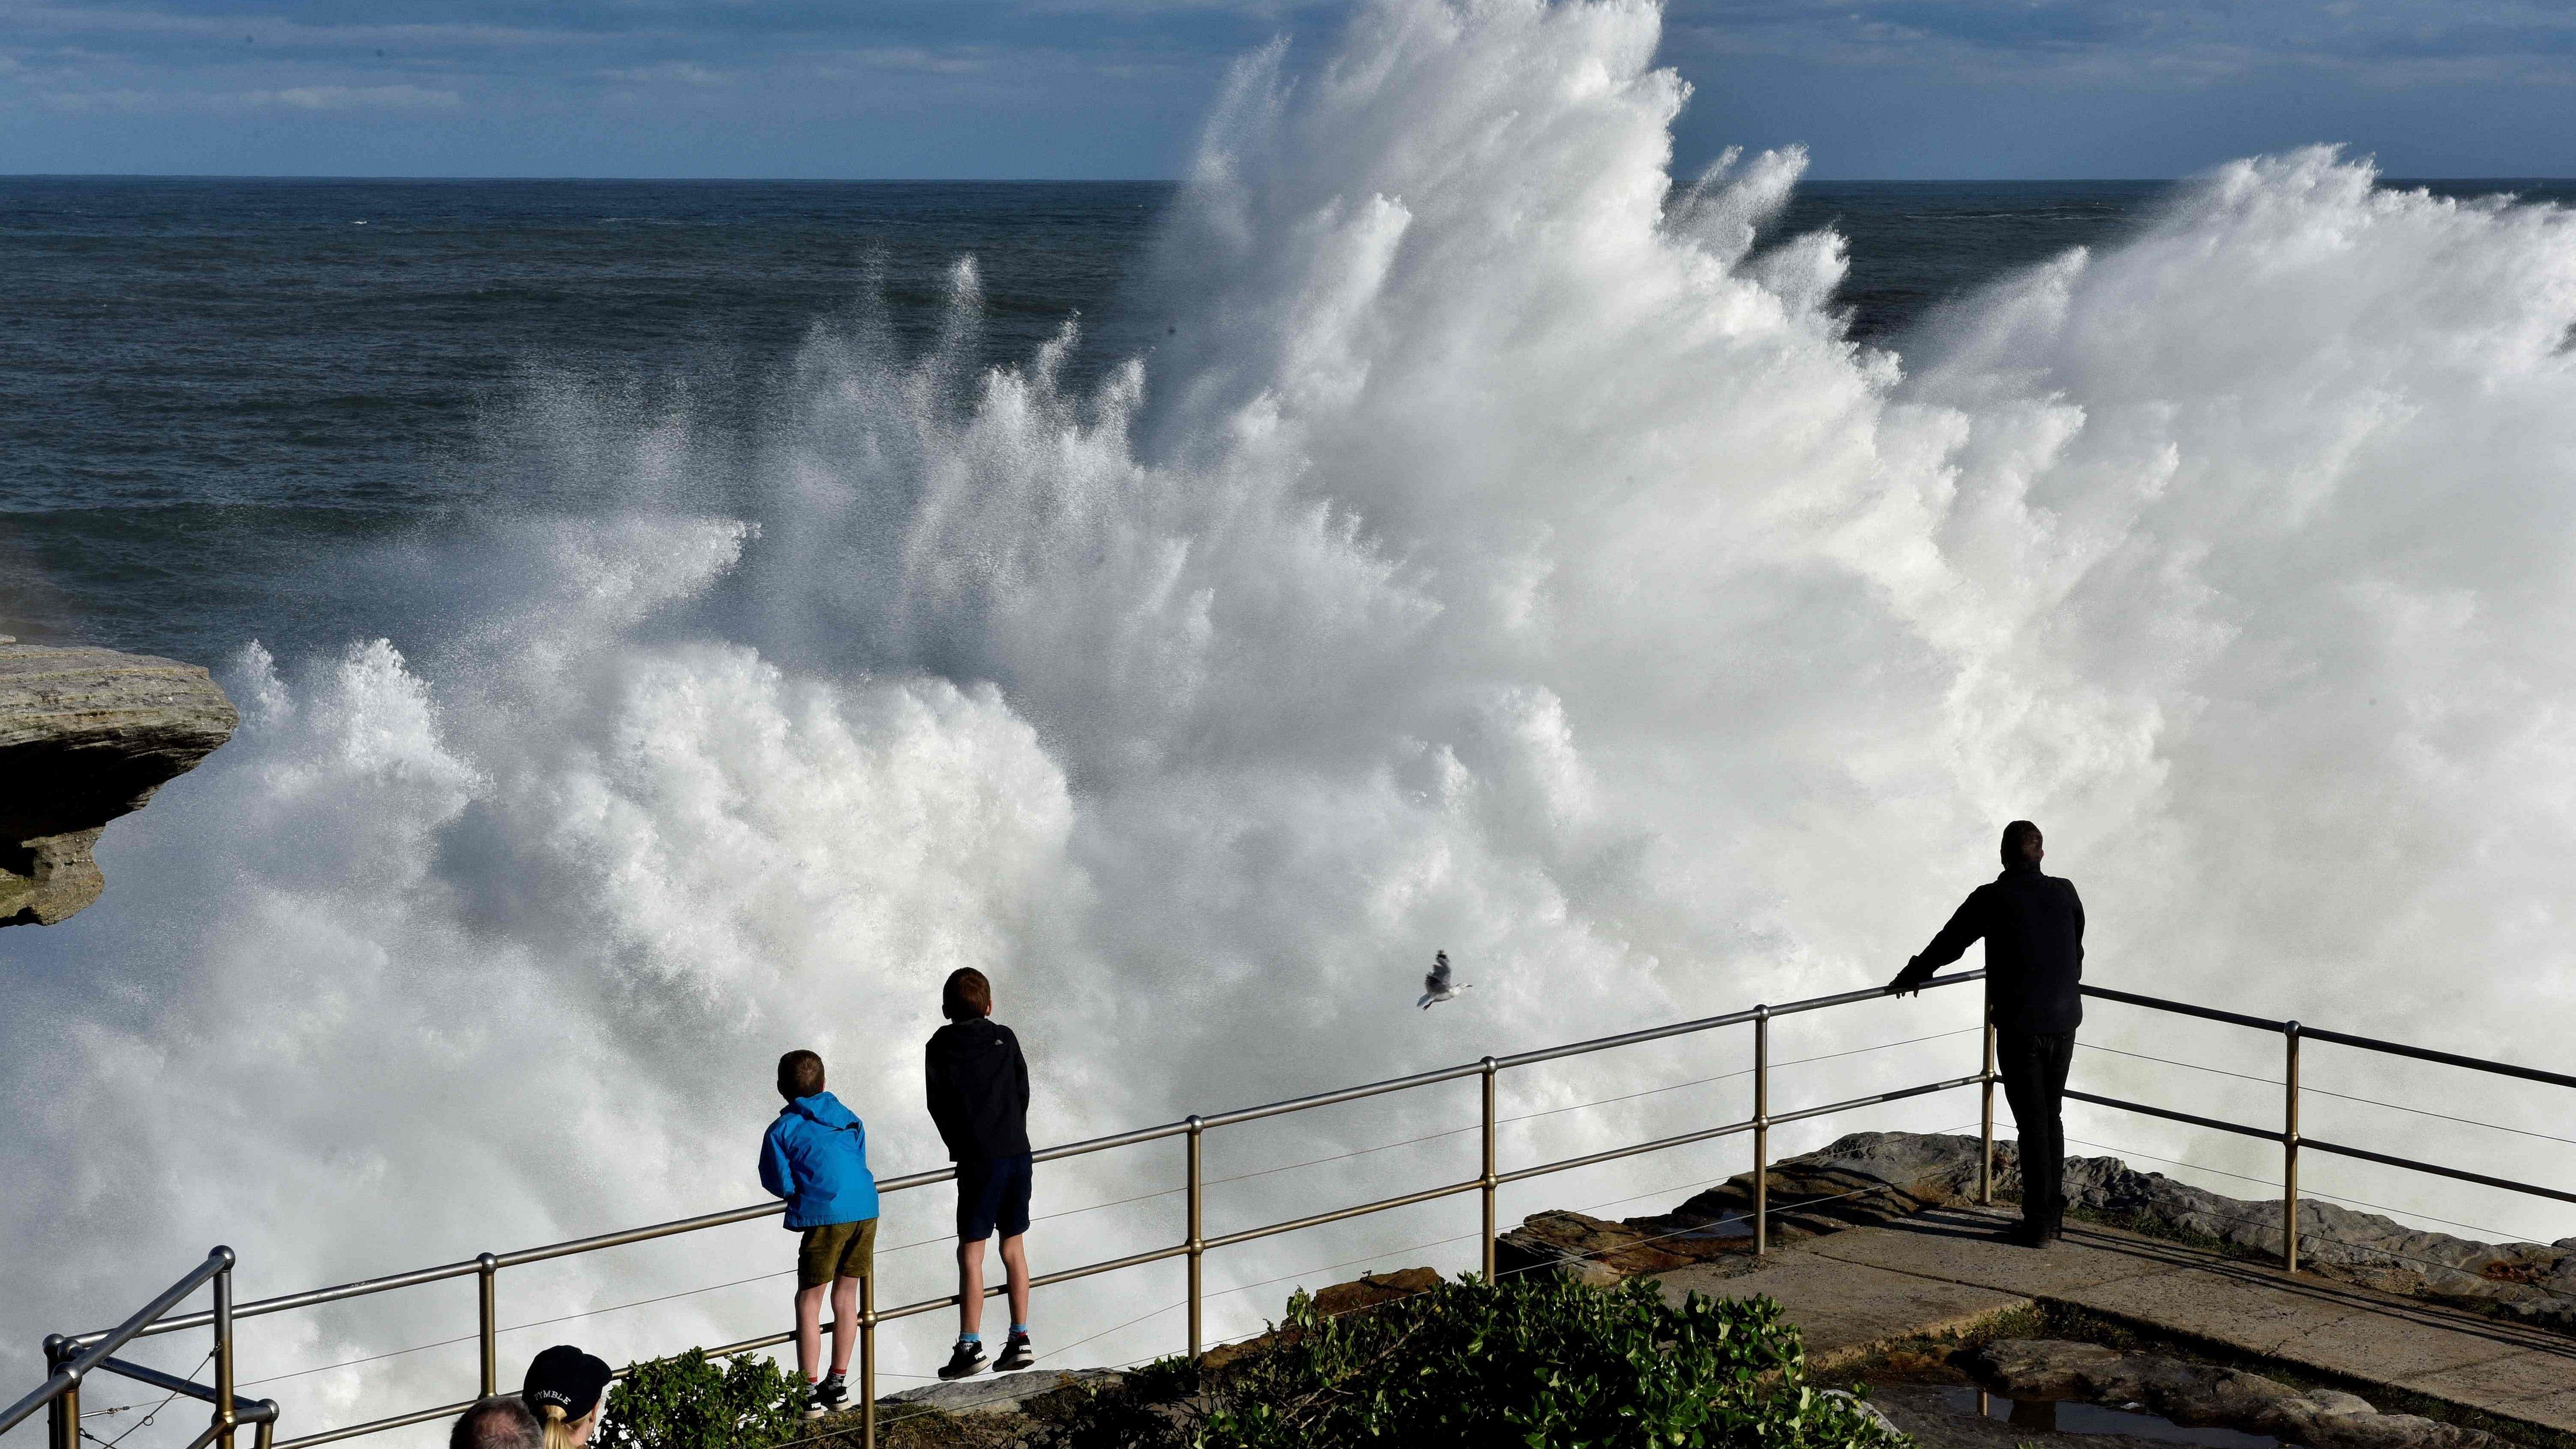 Residents watch a wave crashing into rocks at Bondi Beach in Sydney. Credit: AFP Photo